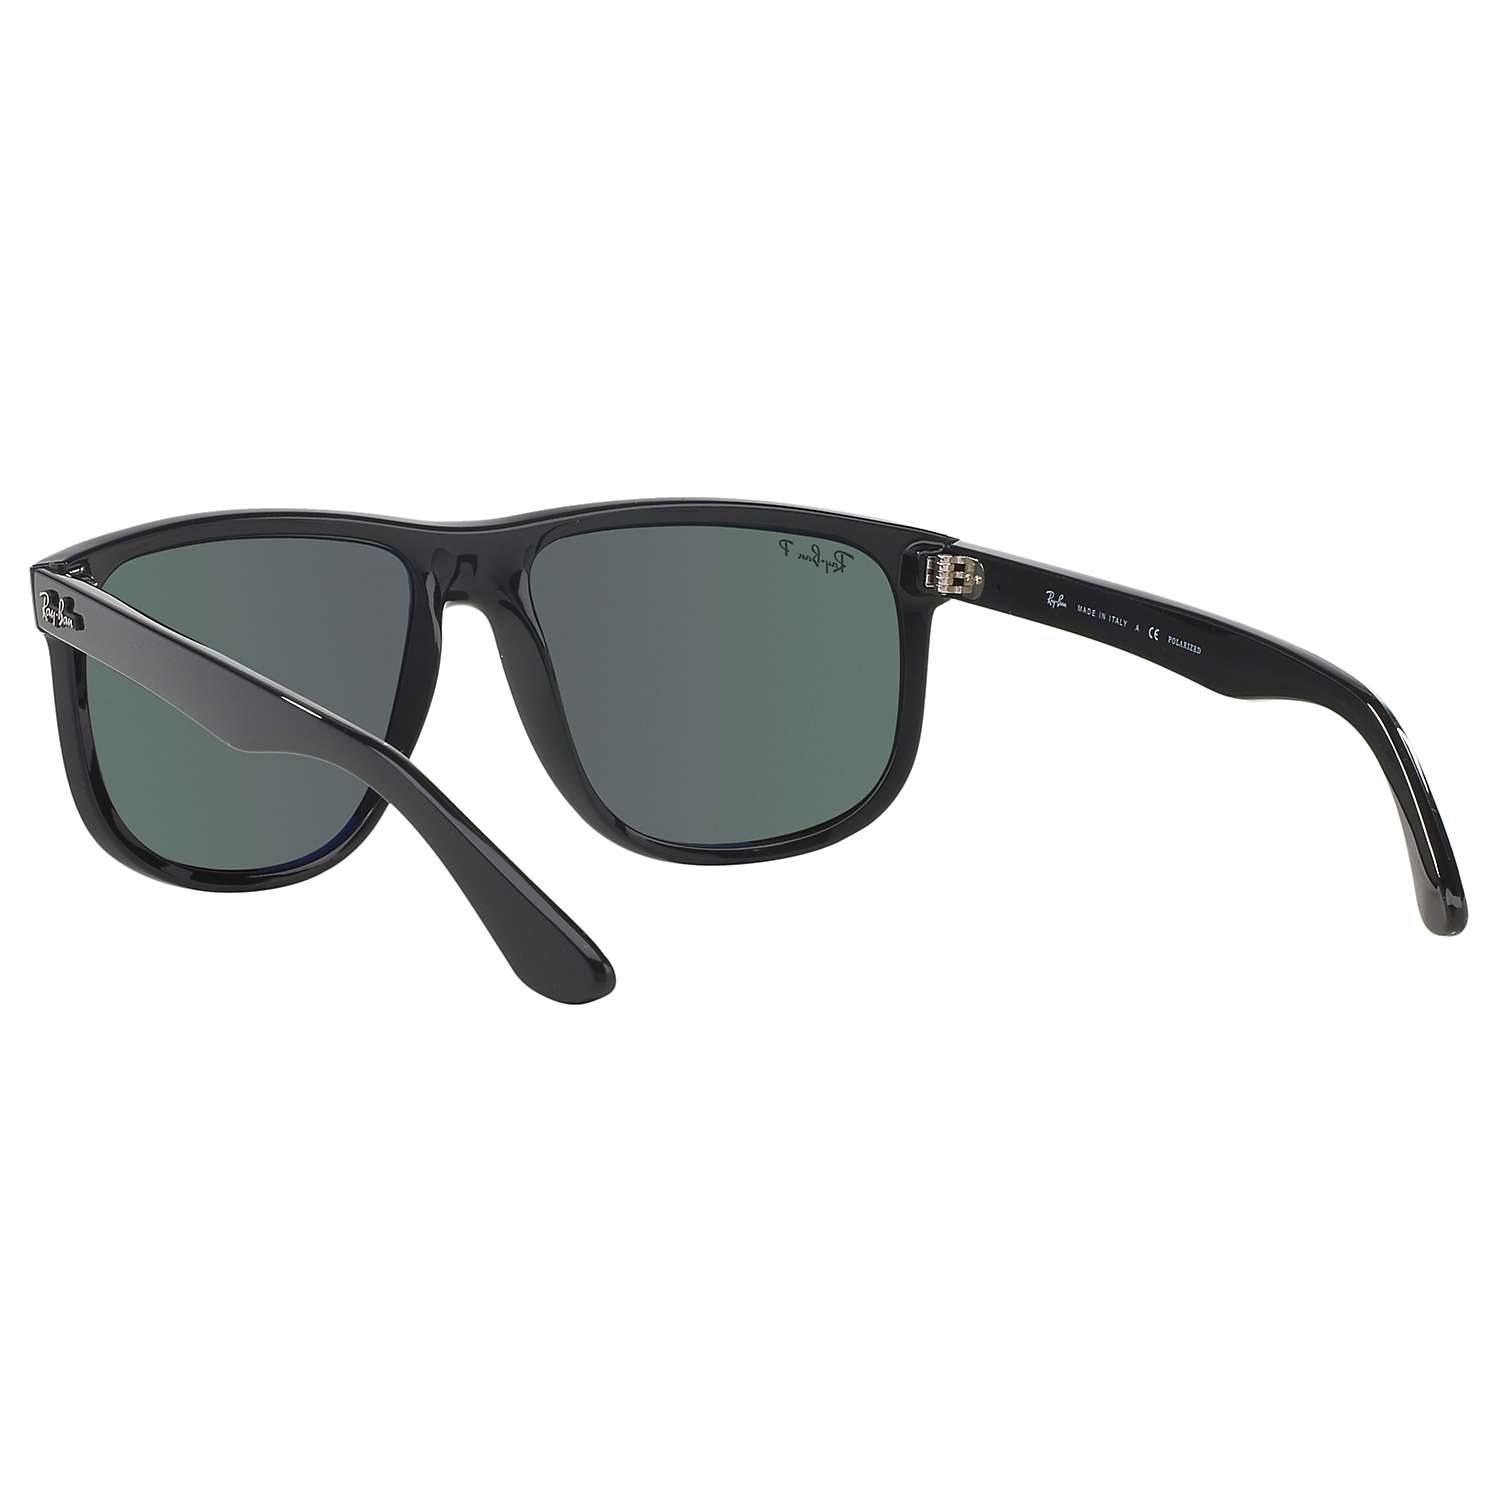 Buy Ray-Ban RB4147 Polarised Square Sunglasses, Black Online at johnlewis.com